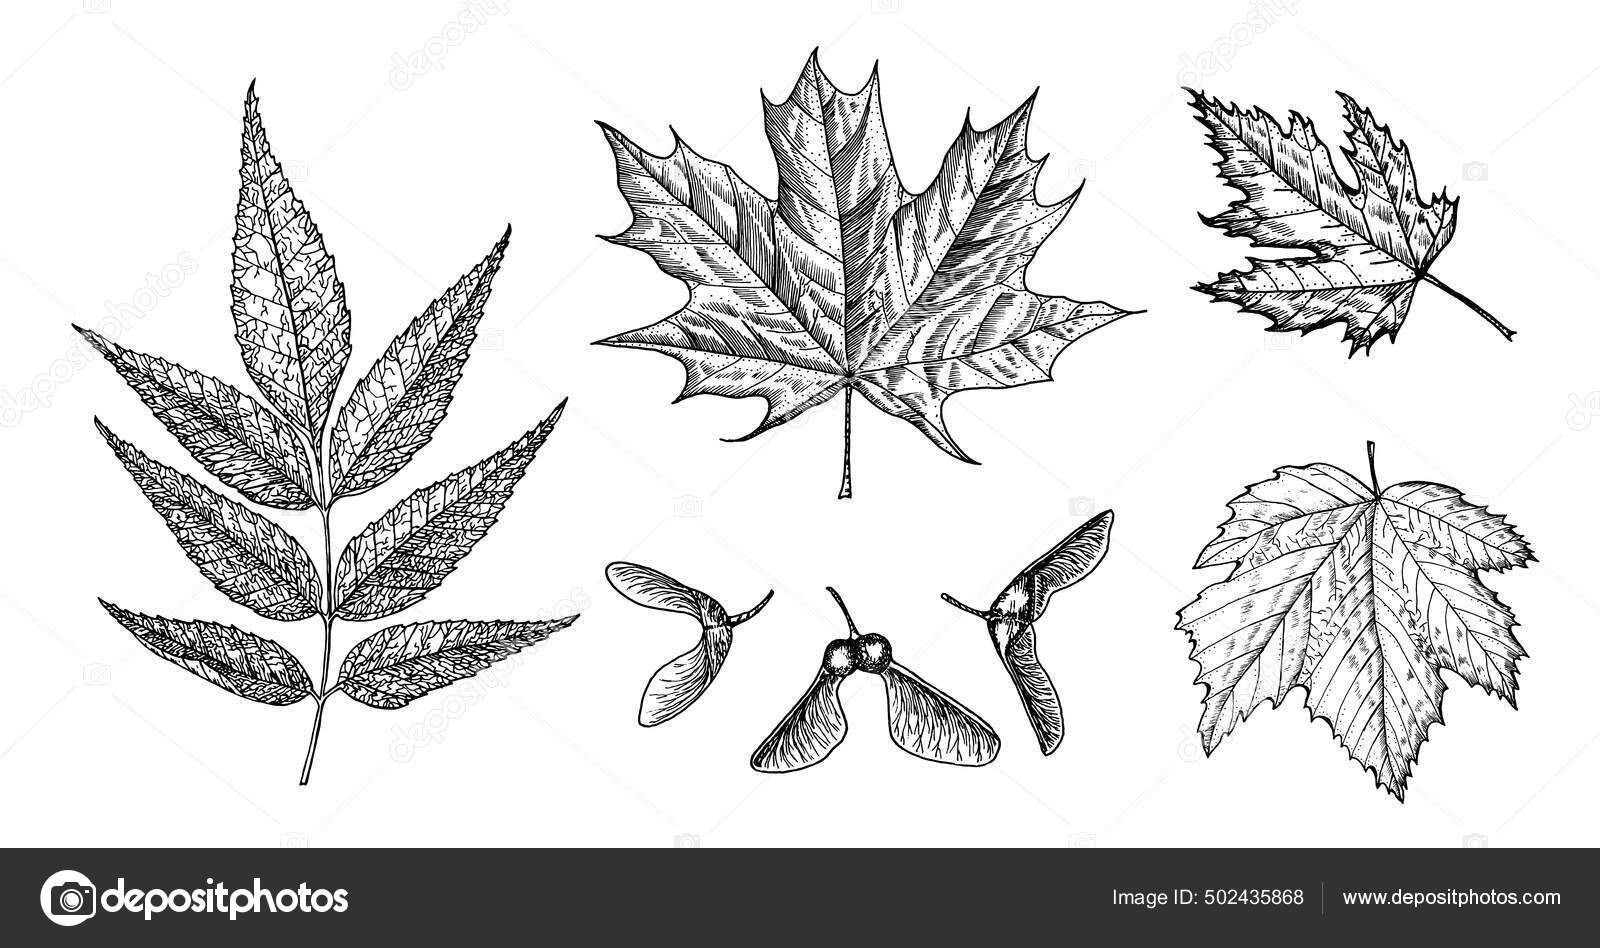 Maple leaf. Vector vintage engraved illustration. Isolated on